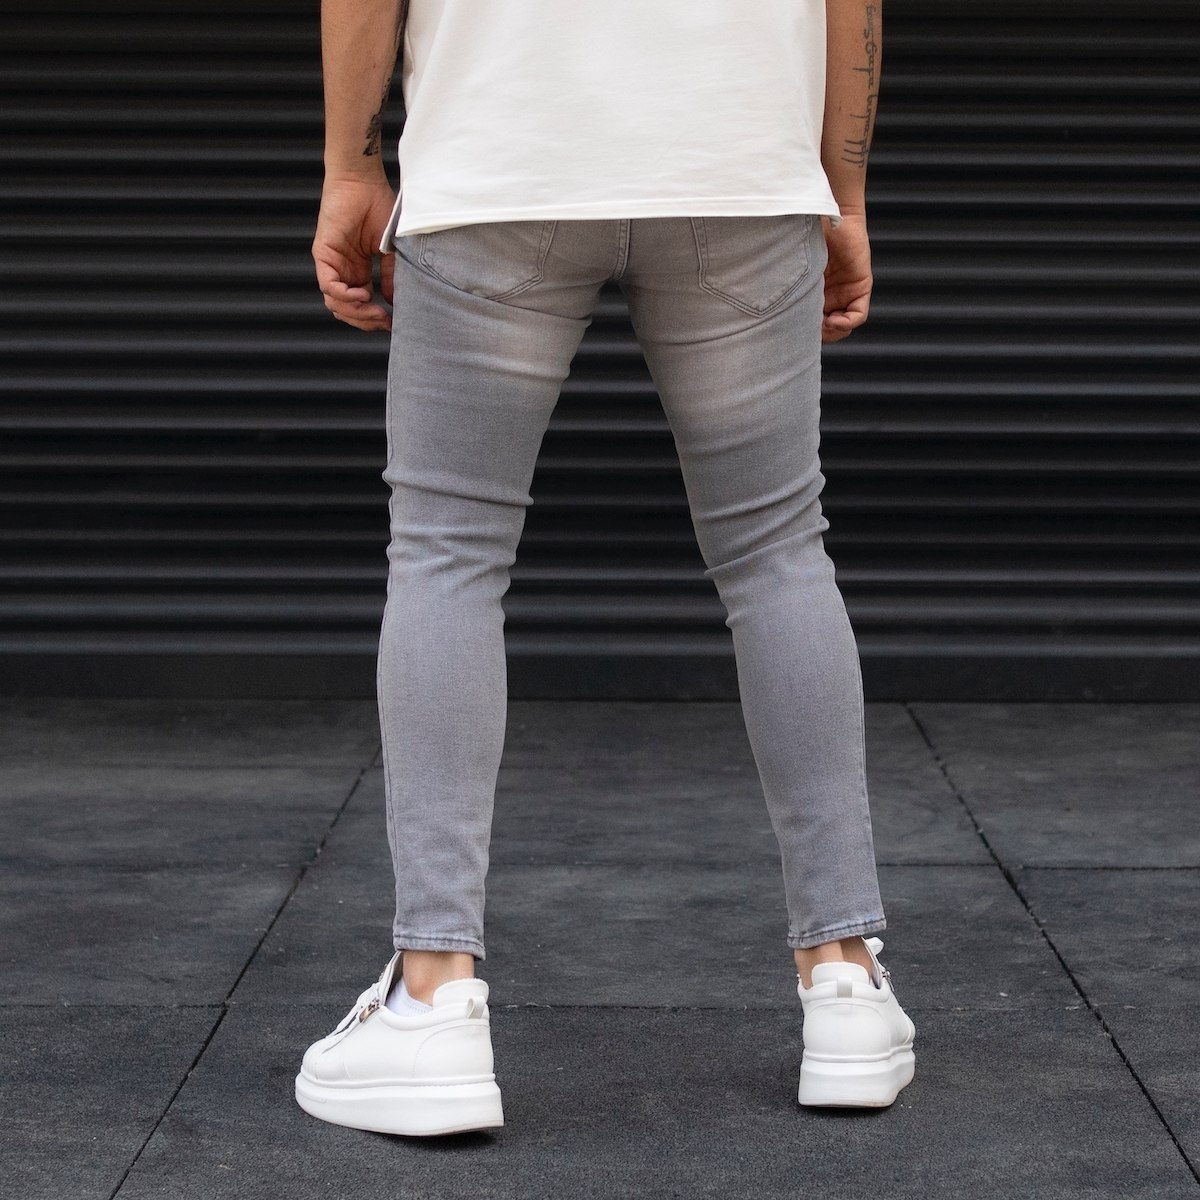 Men's Distorted Grey Basic Jeans